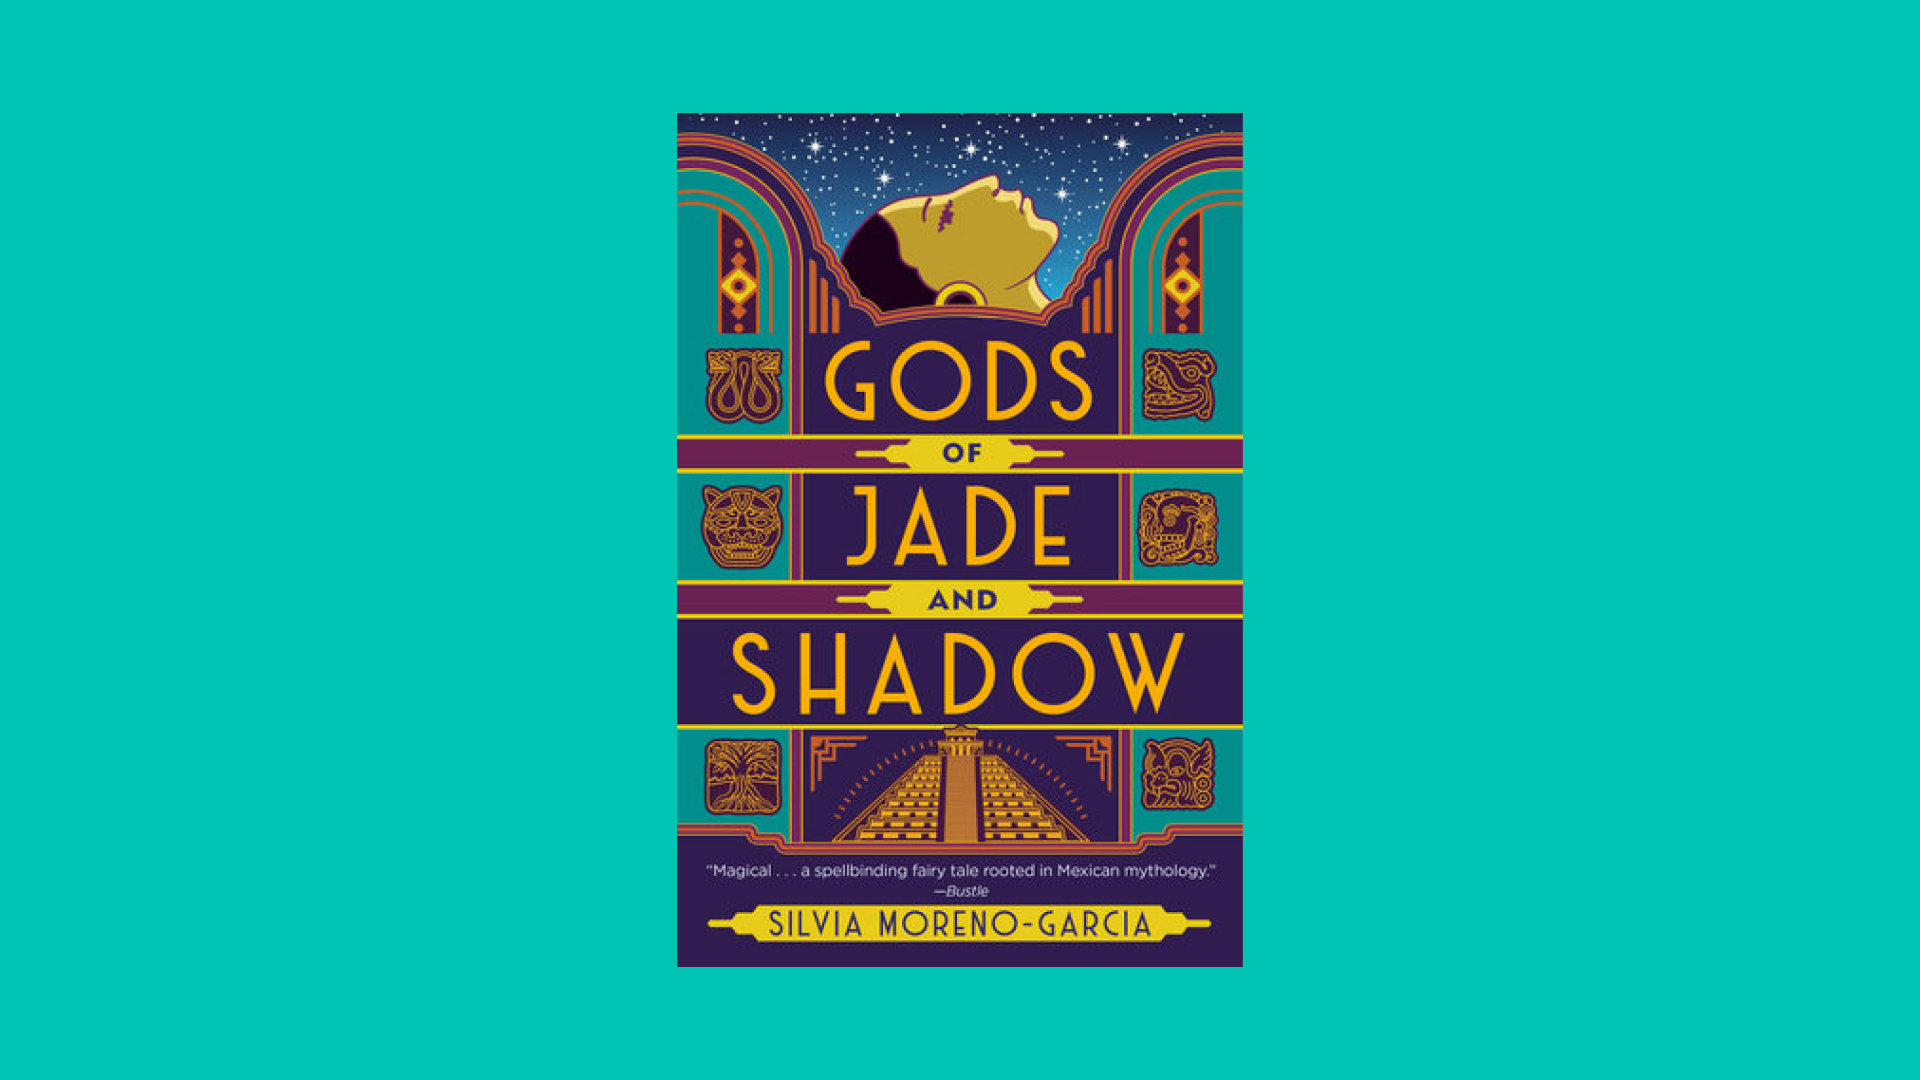 “Gods of Jade and Shadow” by Silvia Moreno-Garcia